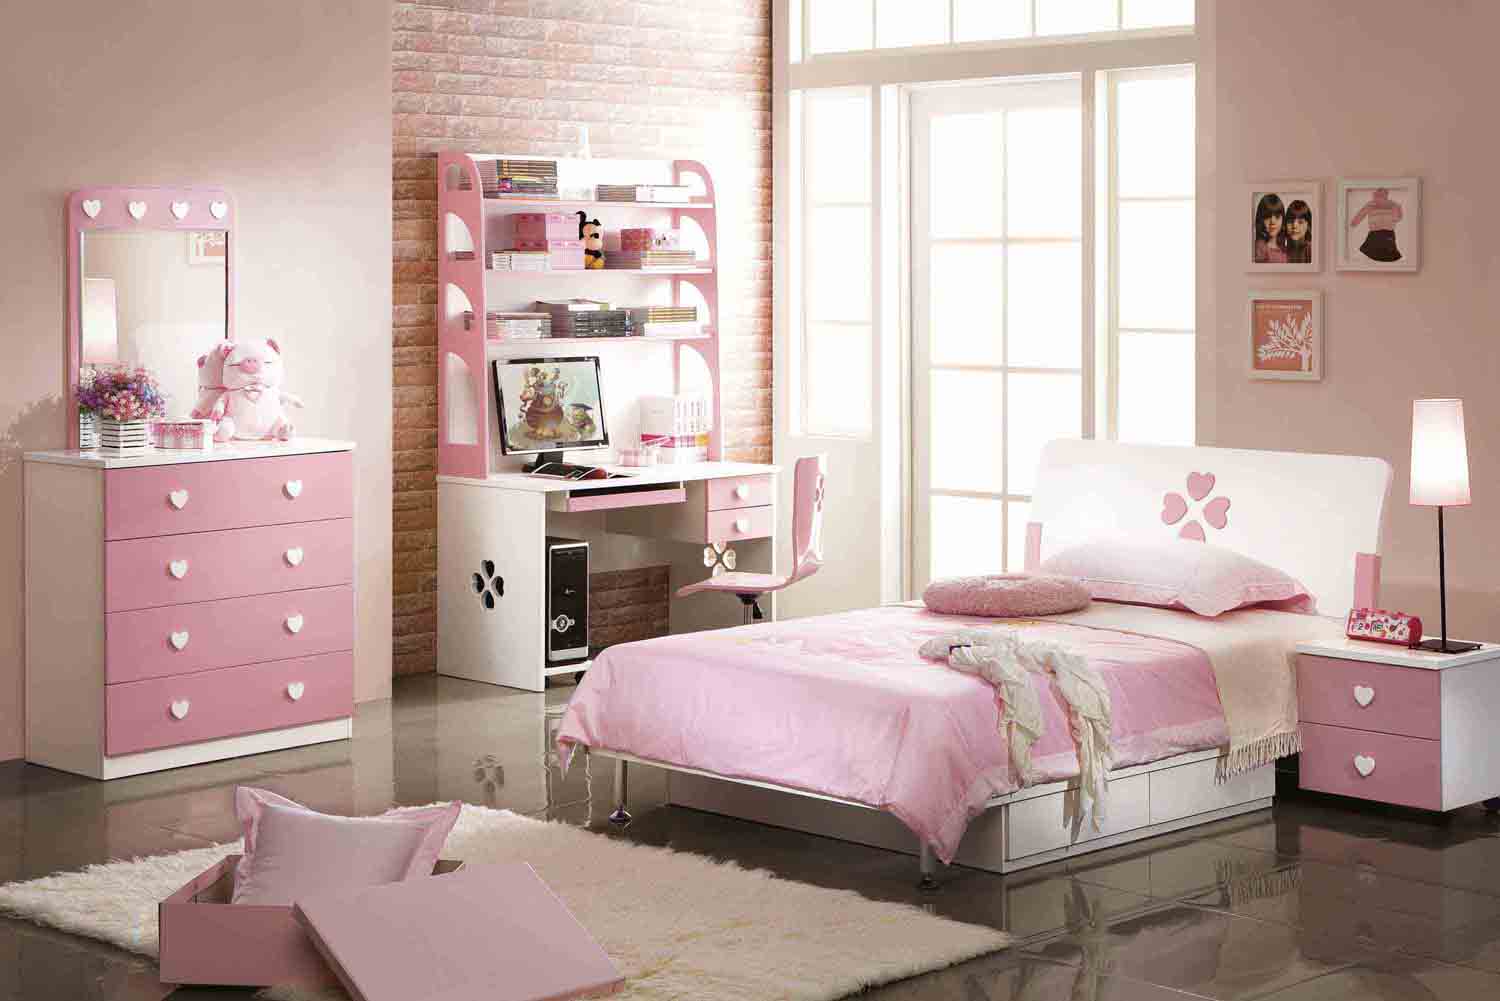 pink bedroom wallpaper,bedroom,furniture,bed,room,pink